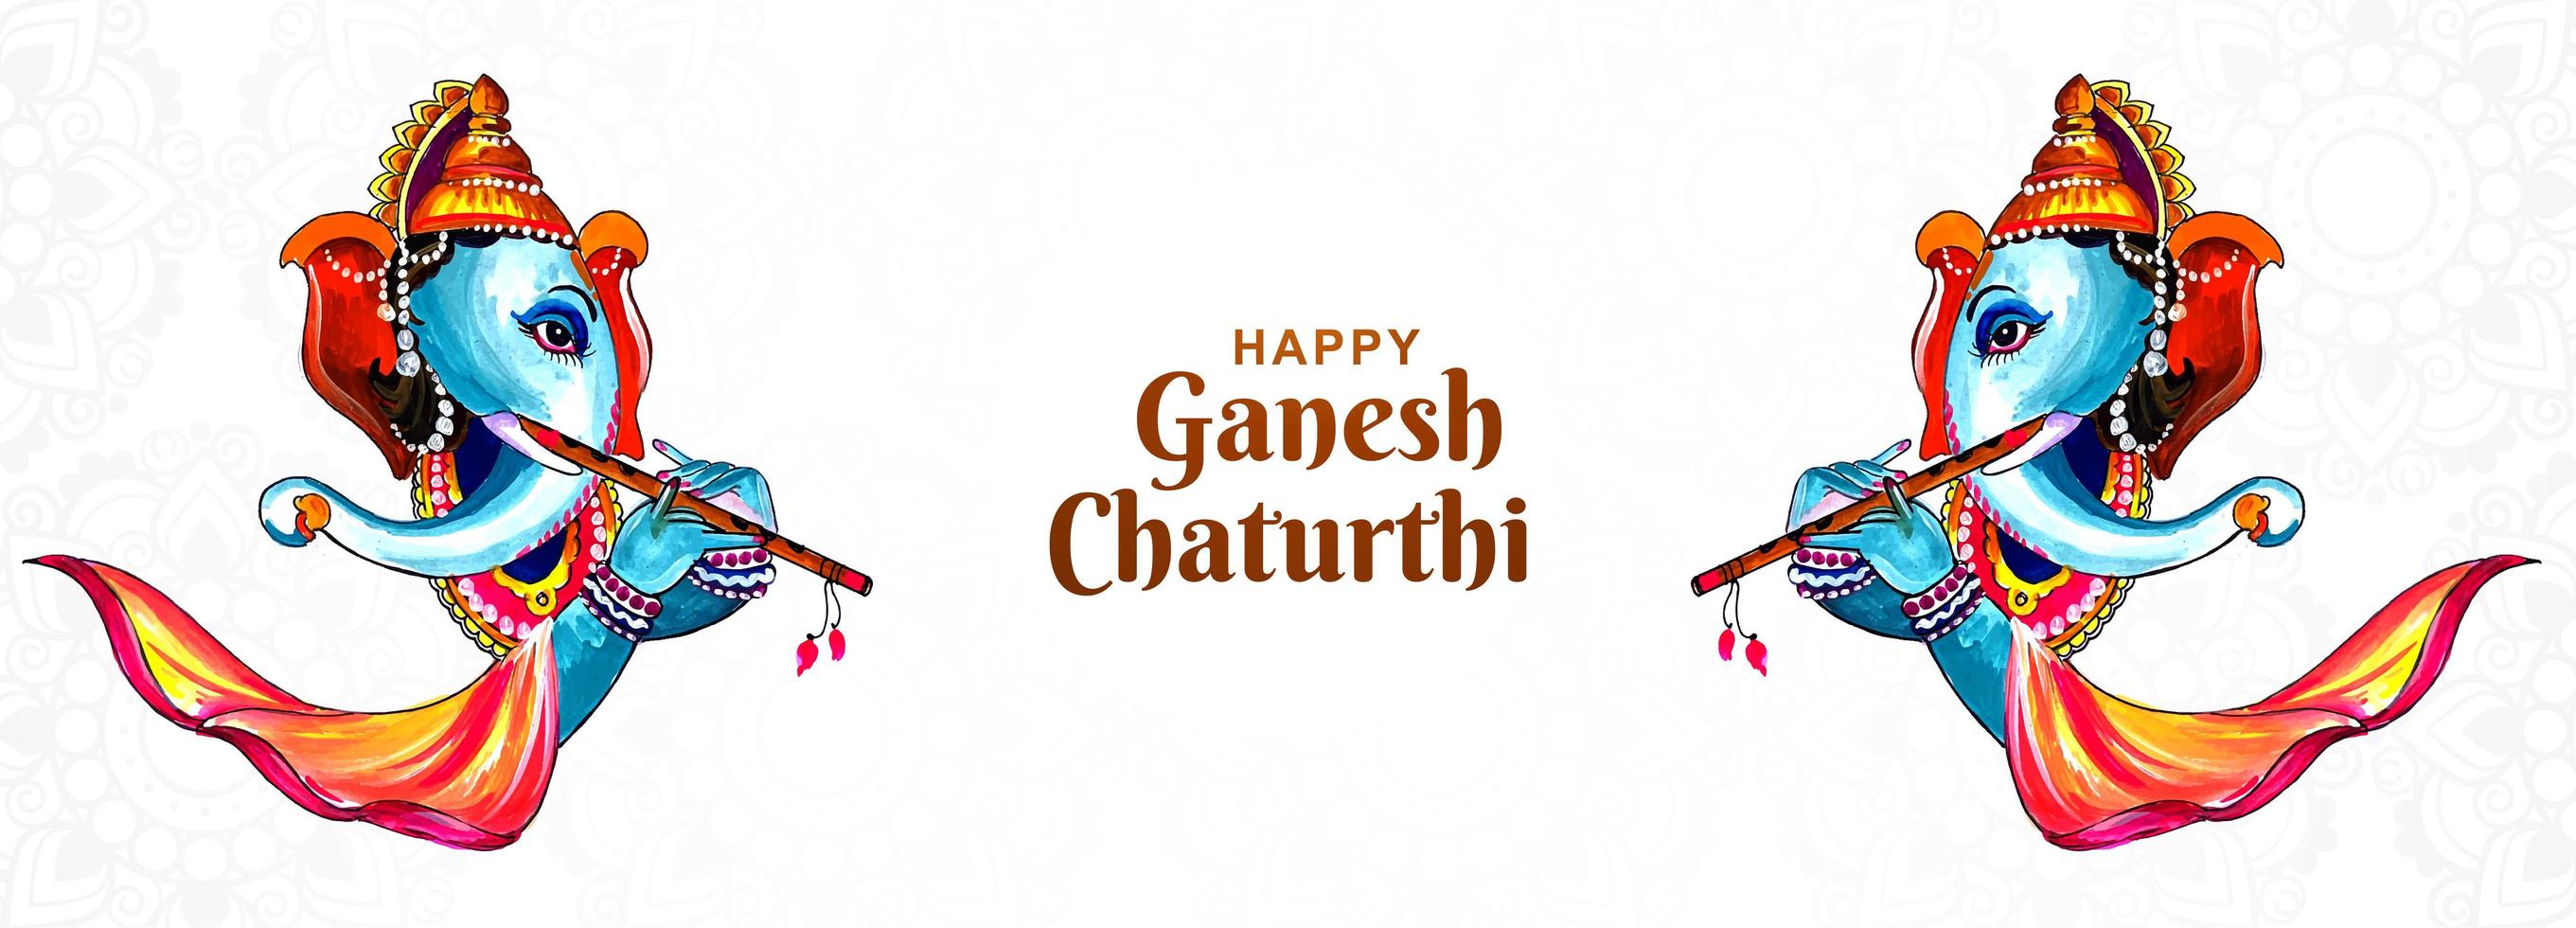 banner del festival indio ganesh chaturthi pintado vector